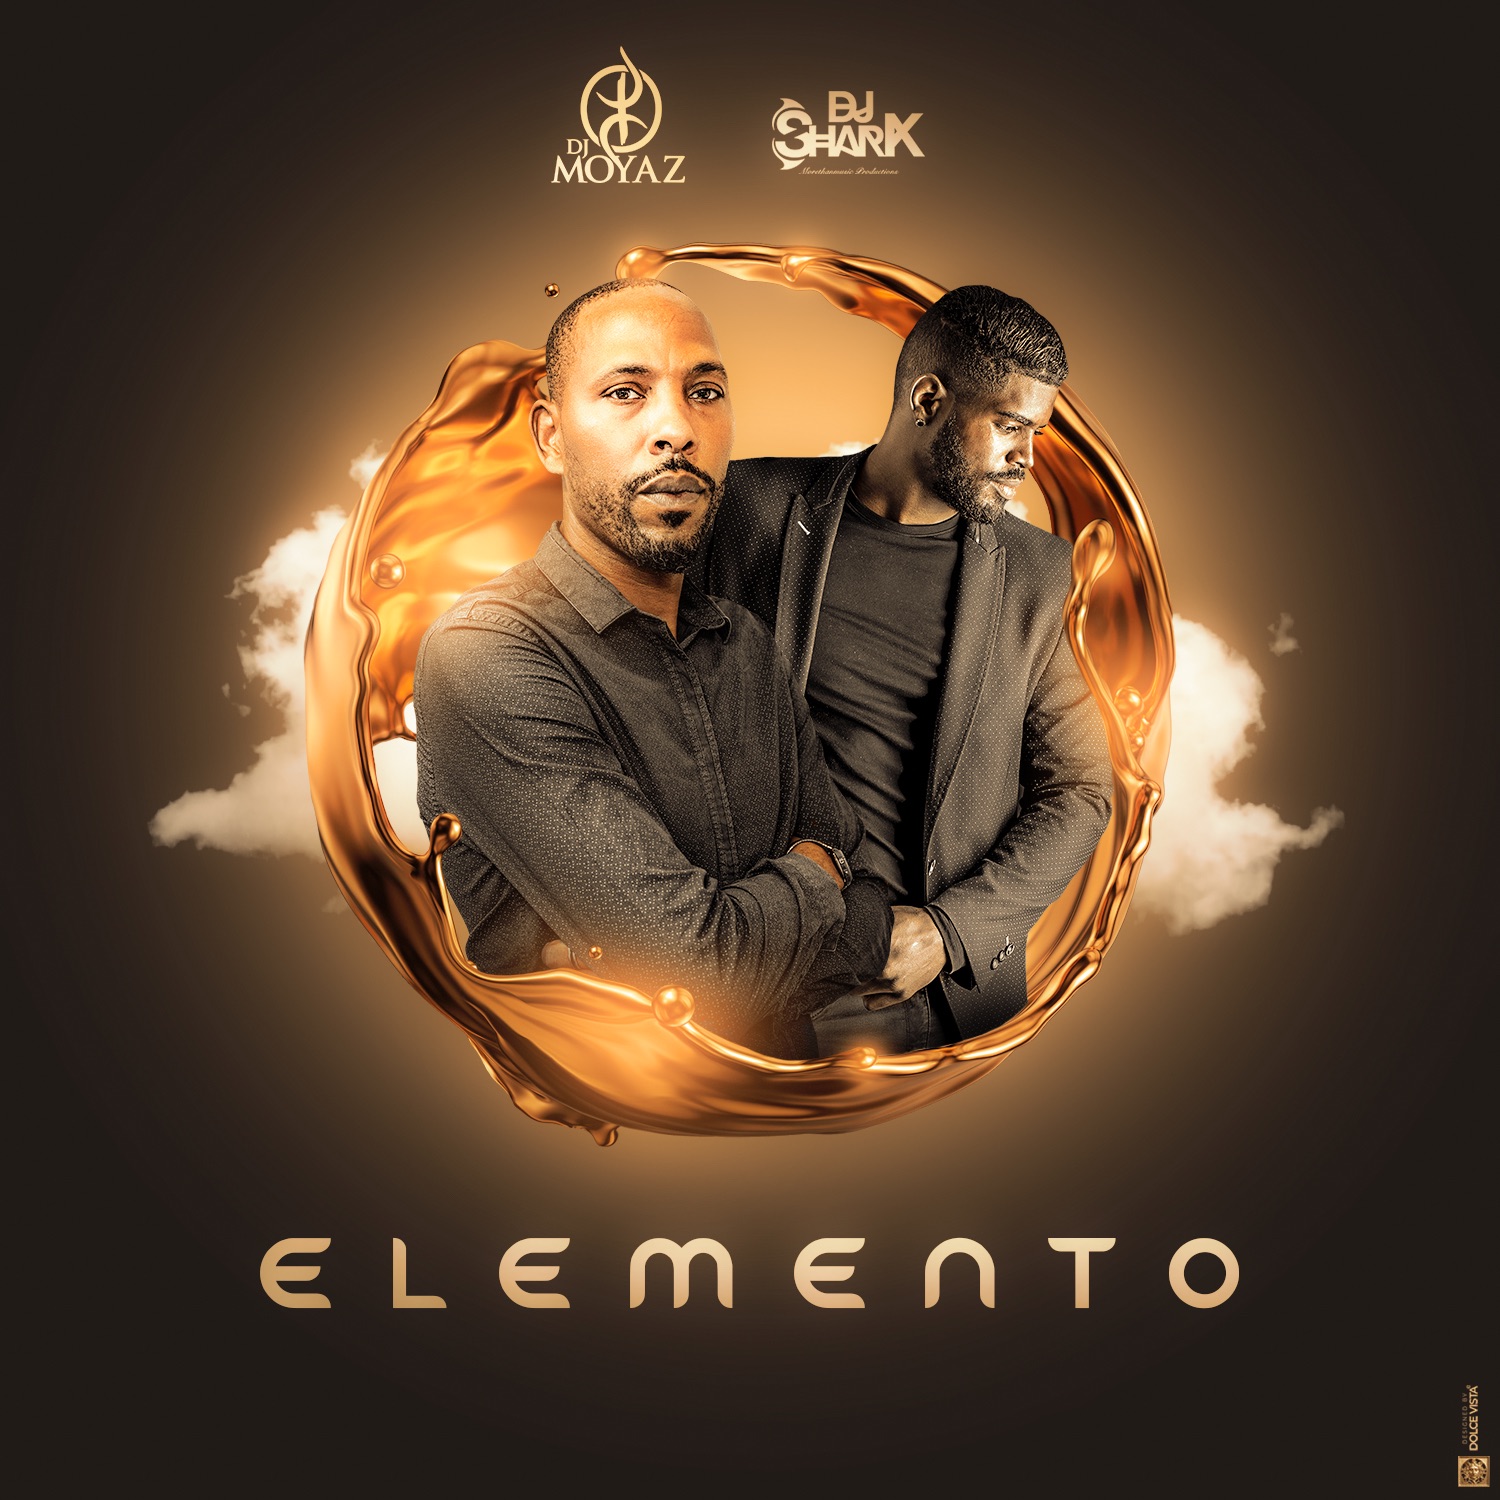 Download Dj Moyaz ft Dj Shark - Elemento